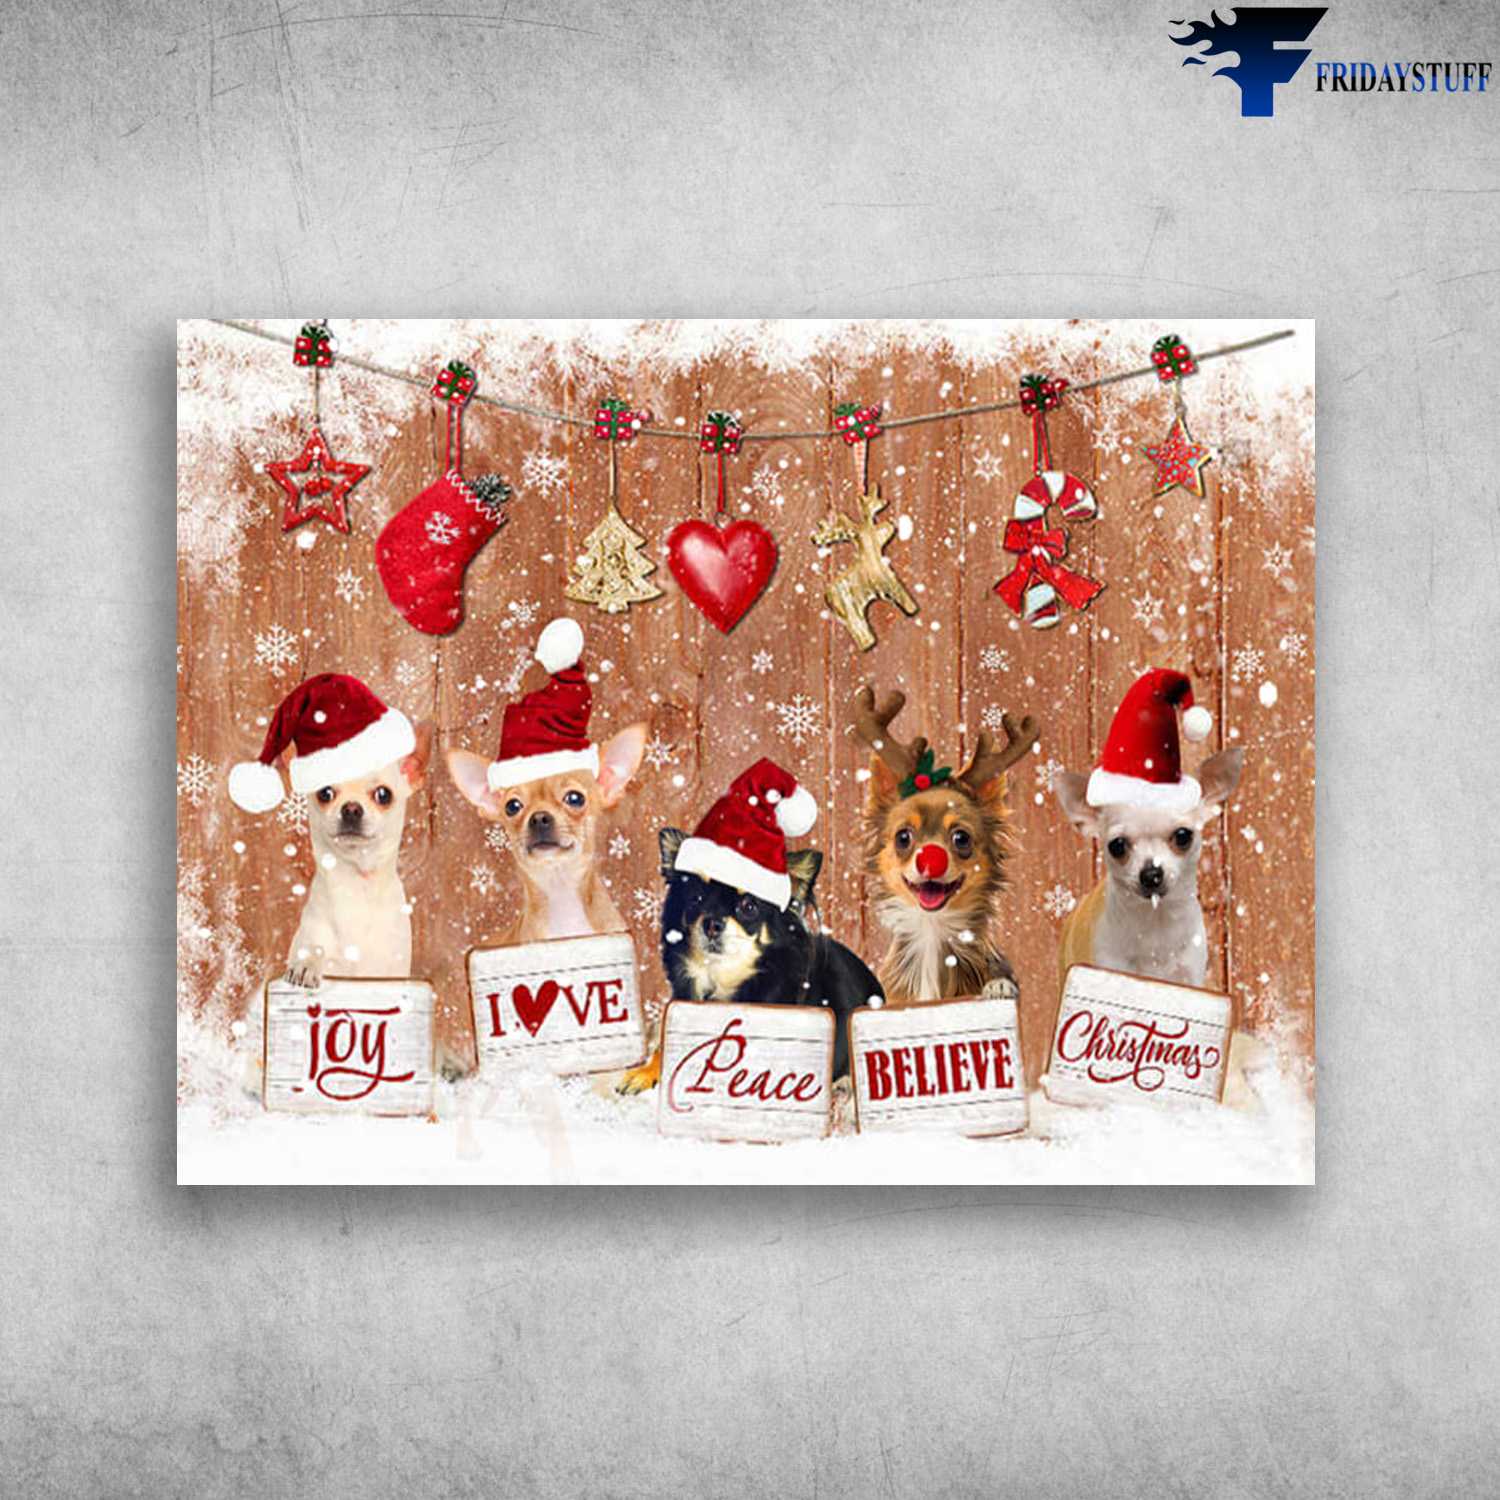 Chihuahua Dog, Christmas Poster - Joy Love Peace Believe Christmas